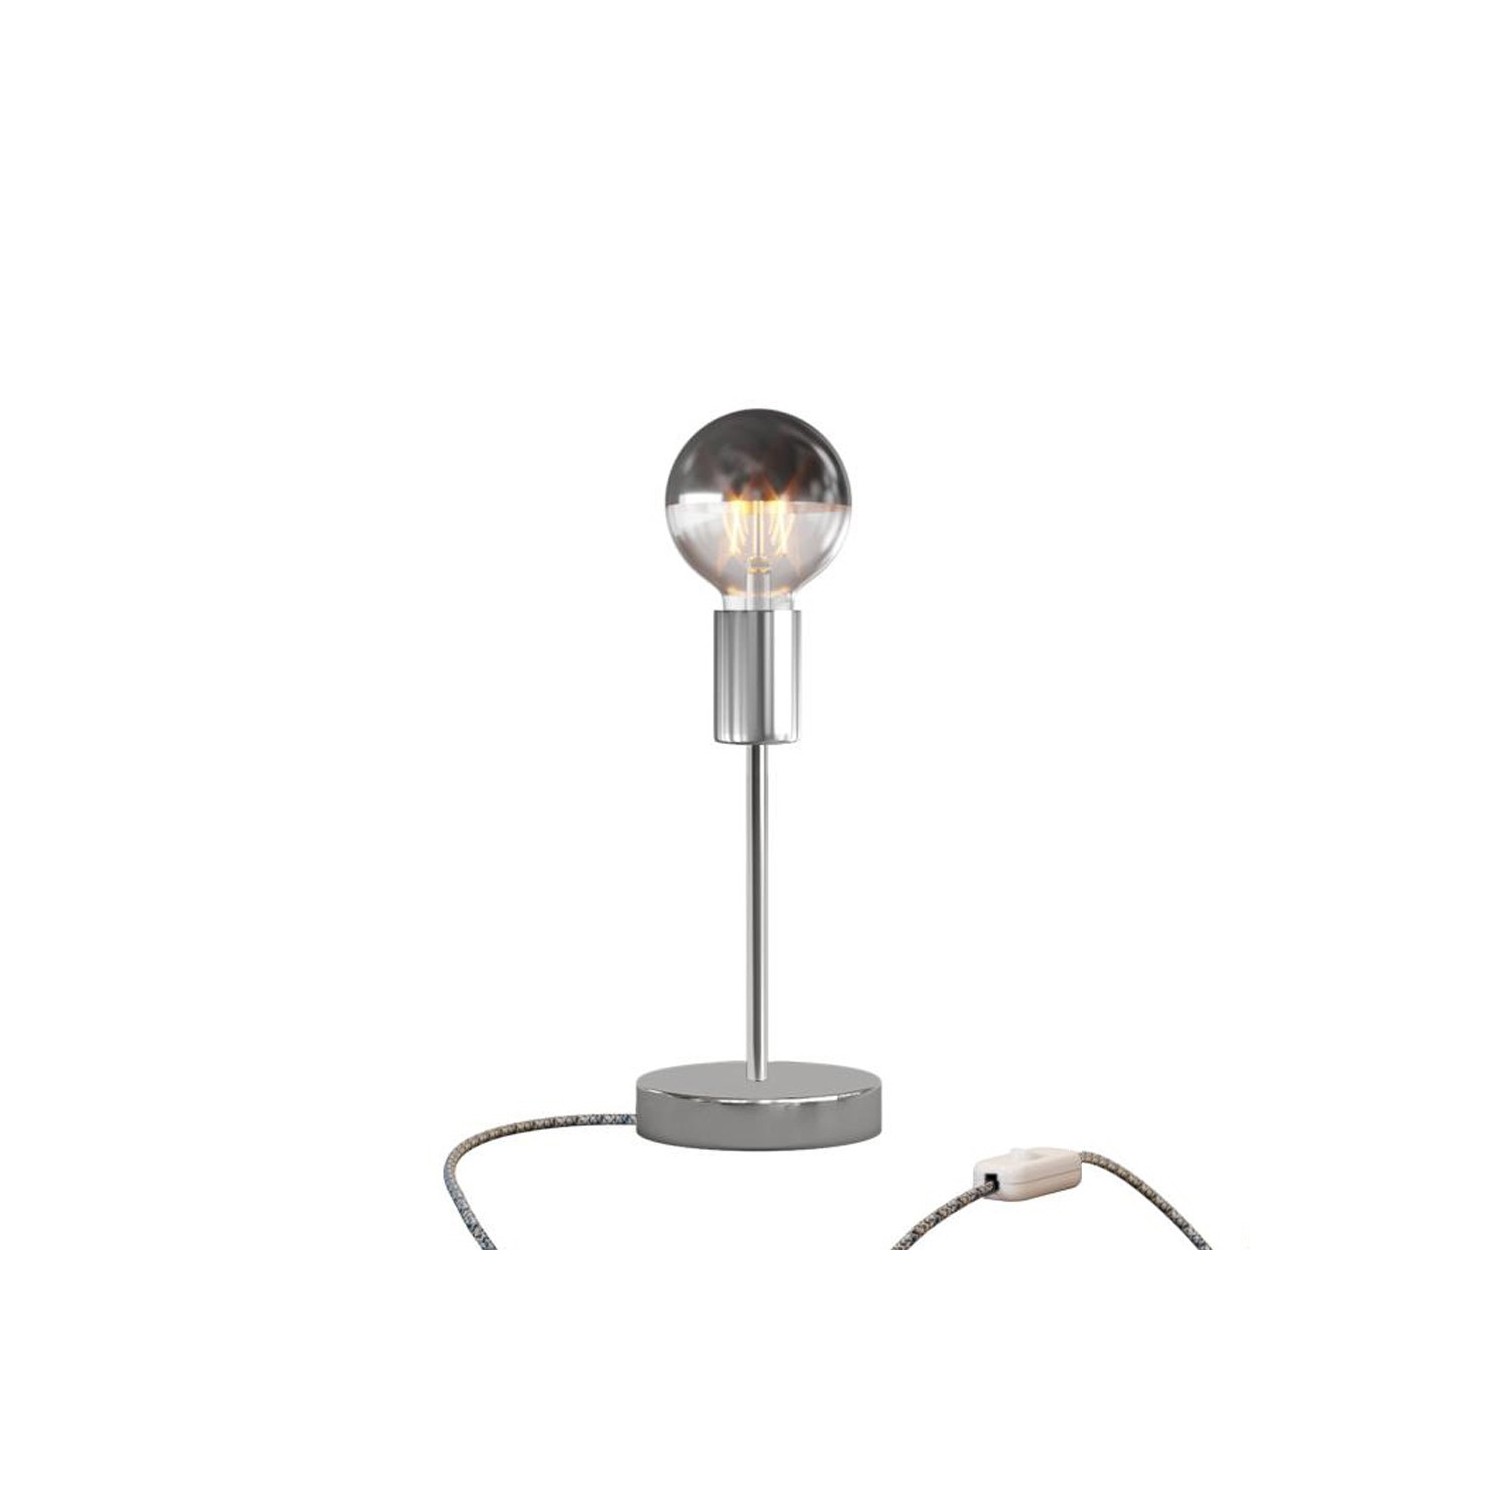 Alzaluce Half Cup Metal Table Lamp